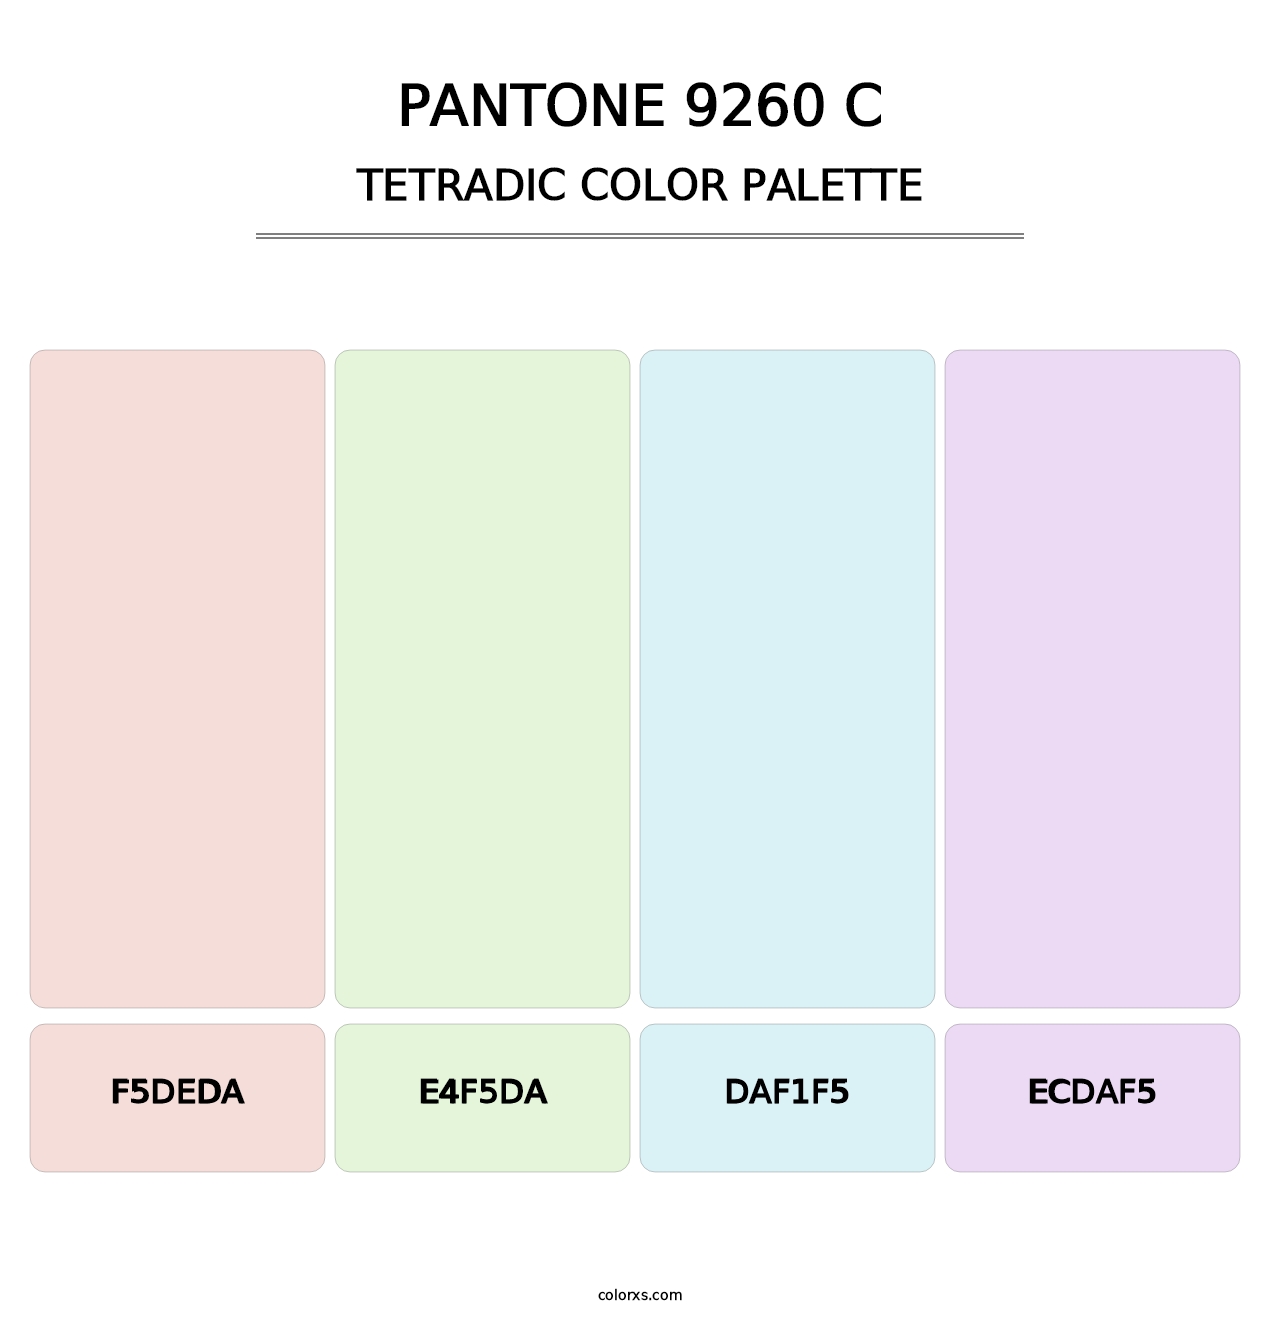 PANTONE 9260 C - Tetradic Color Palette